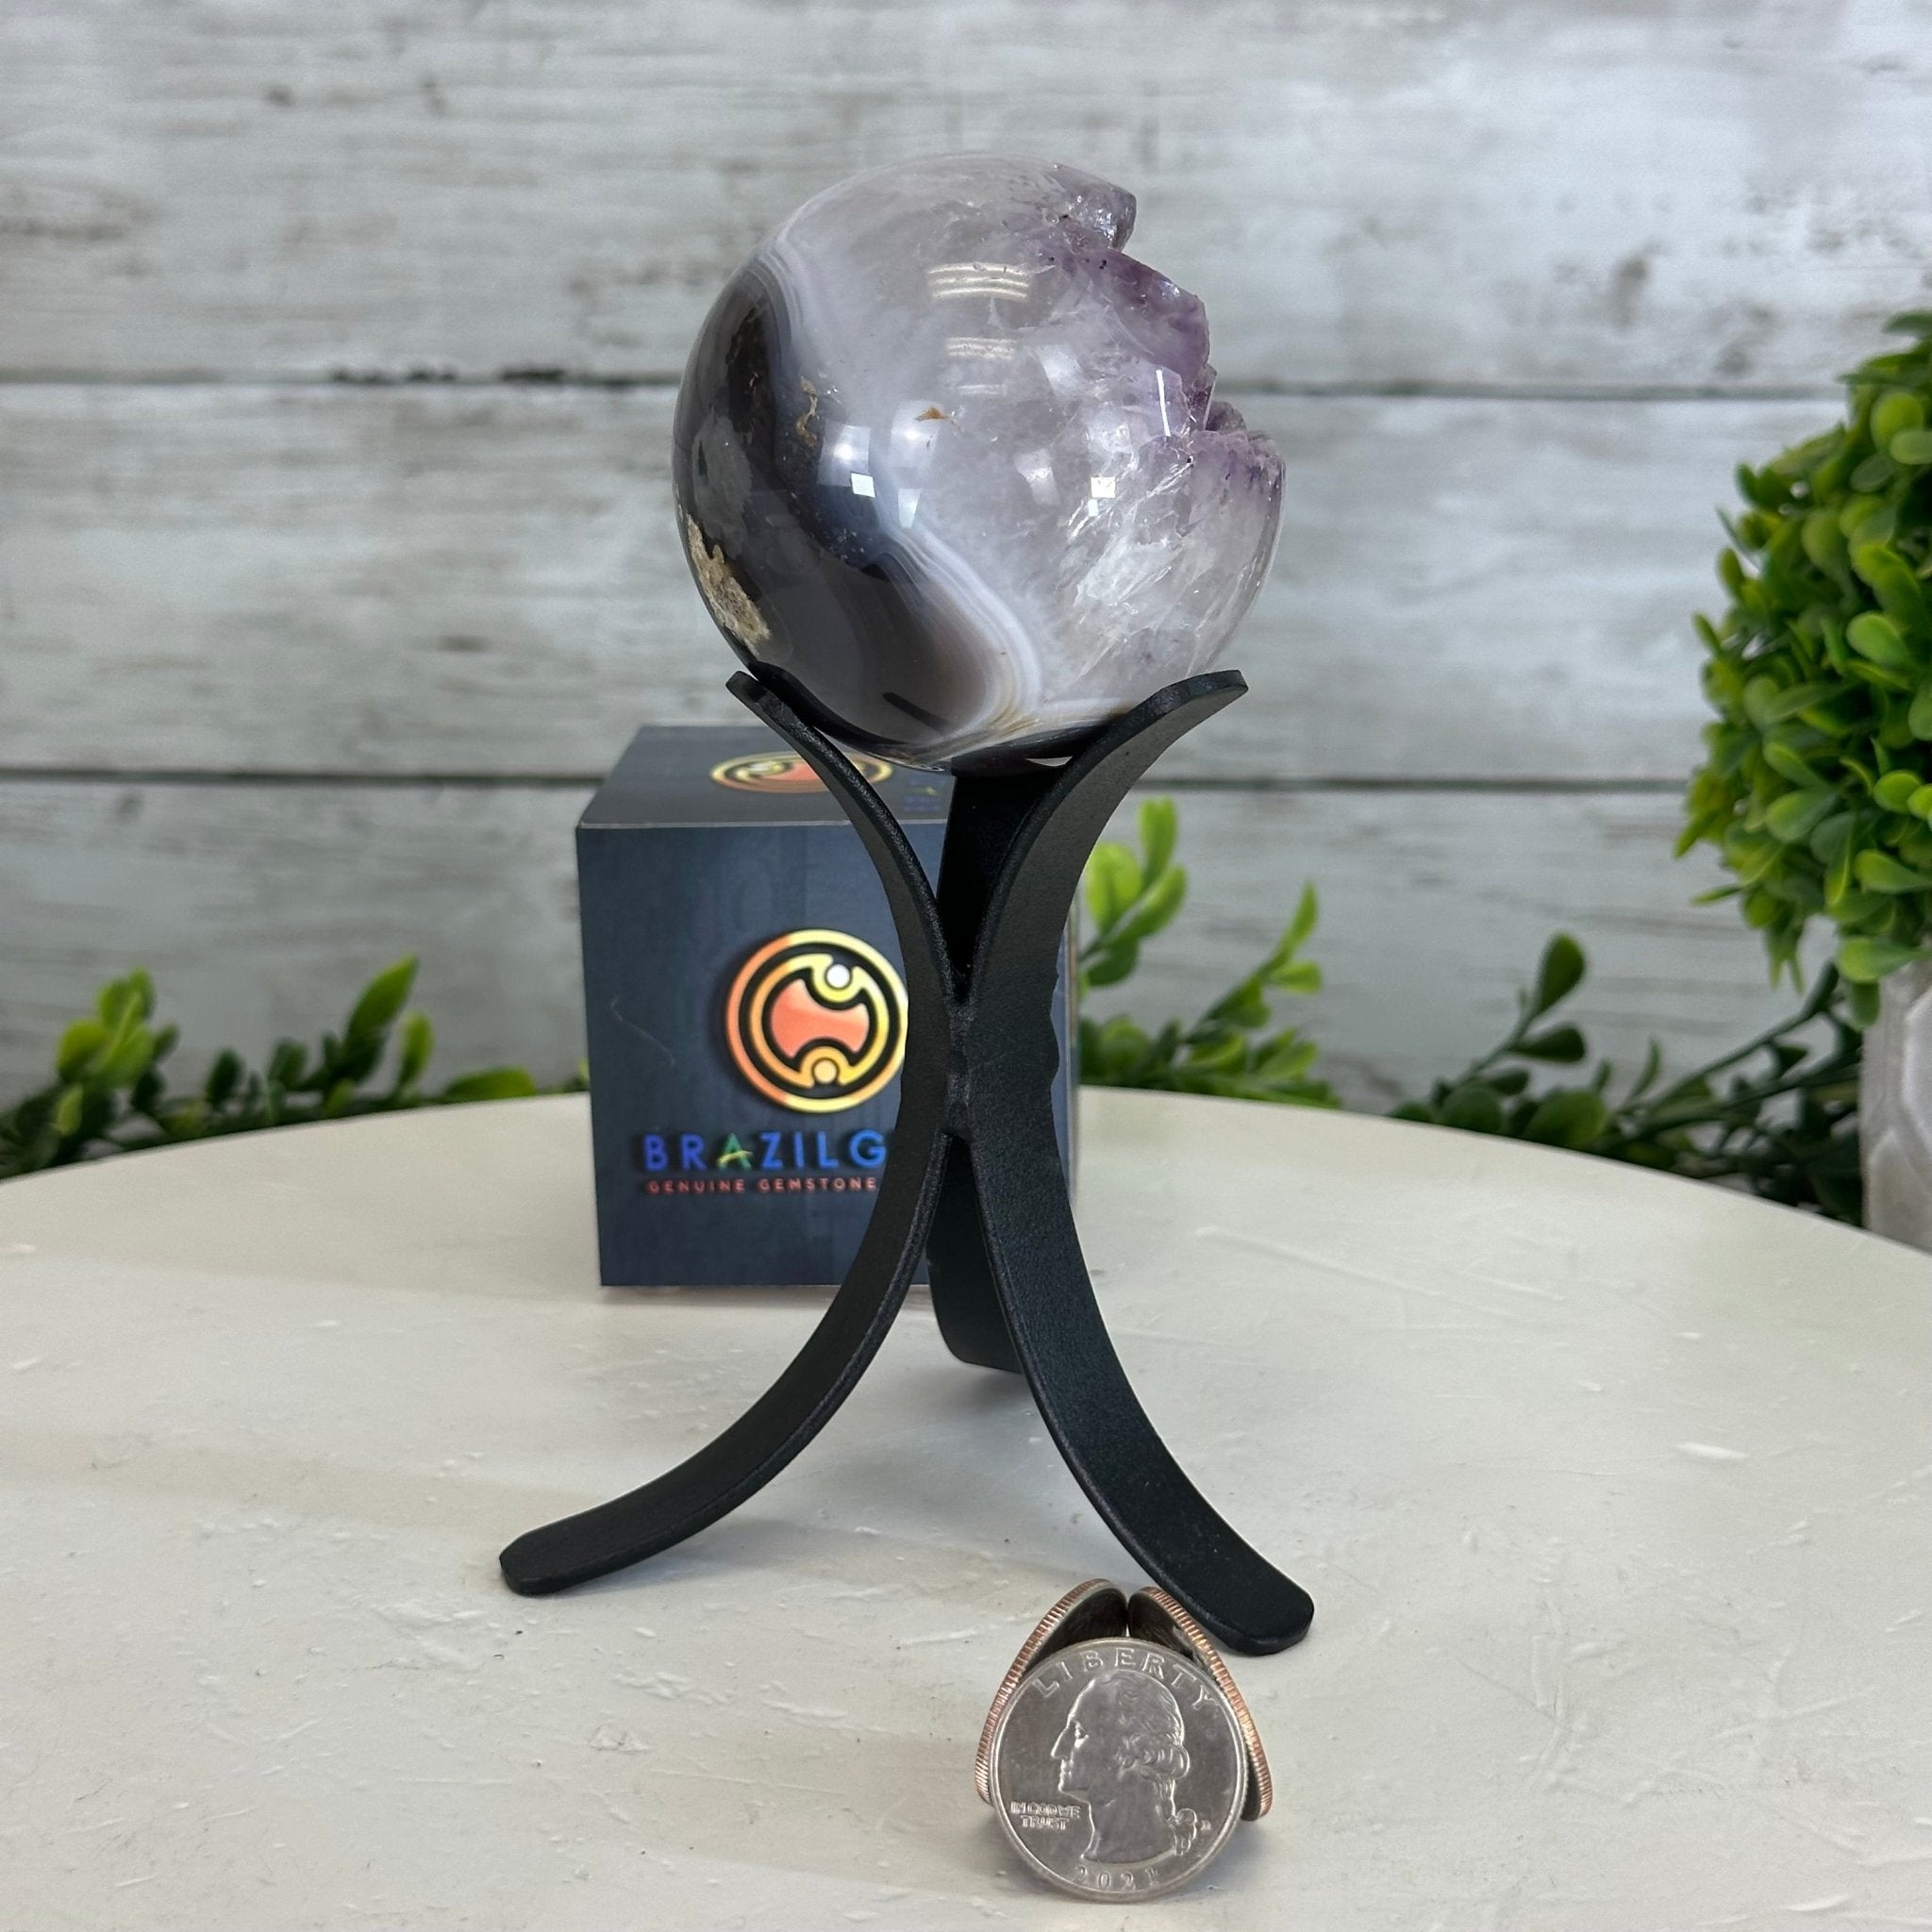 Druzy Amethyst Sphere on a Metal Stand, 0.8 lbs & 6" Tall #5630-0033 - Brazil GemsBrazil GemsDruzy Amethyst Sphere on a Metal Stand, 0.8 lbs & 6" Tall #5630-0033Spheres5630-0033